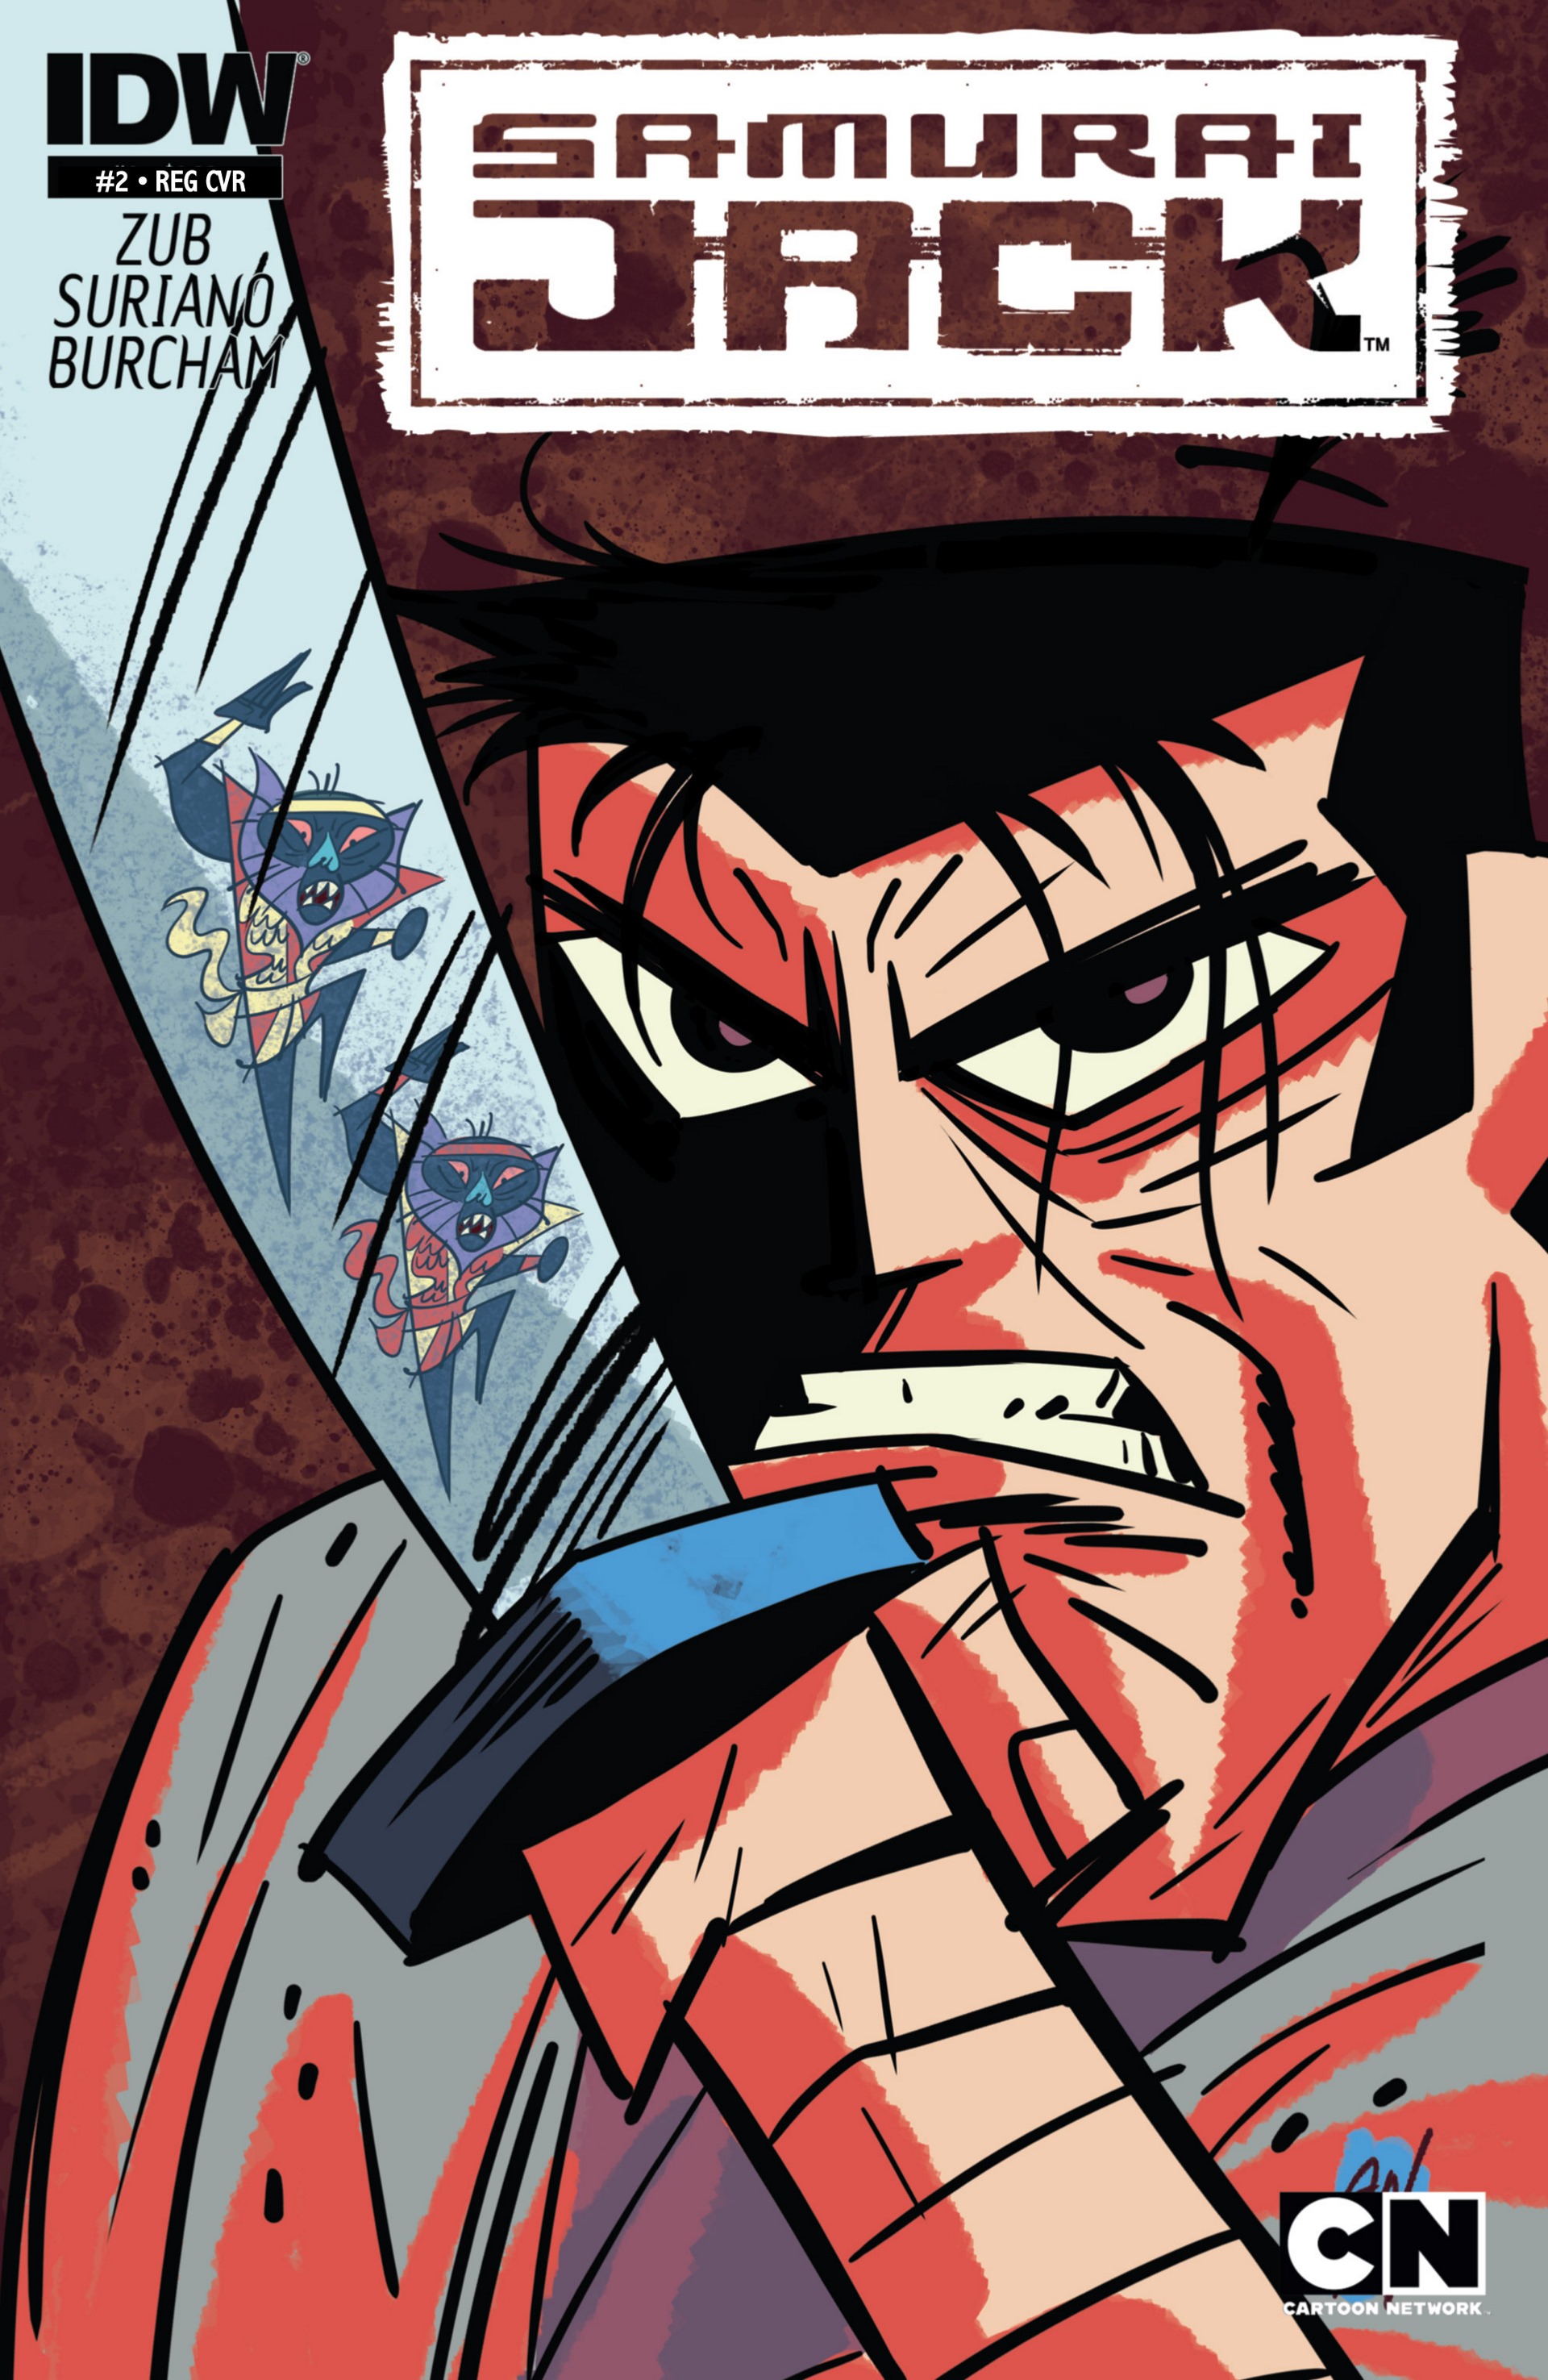 Samurai Jack Issue 2 | Read Samurai Jack Issue 2 comic online in high  quality. Read Full Comic online for free - Read comics online in high  quality .|